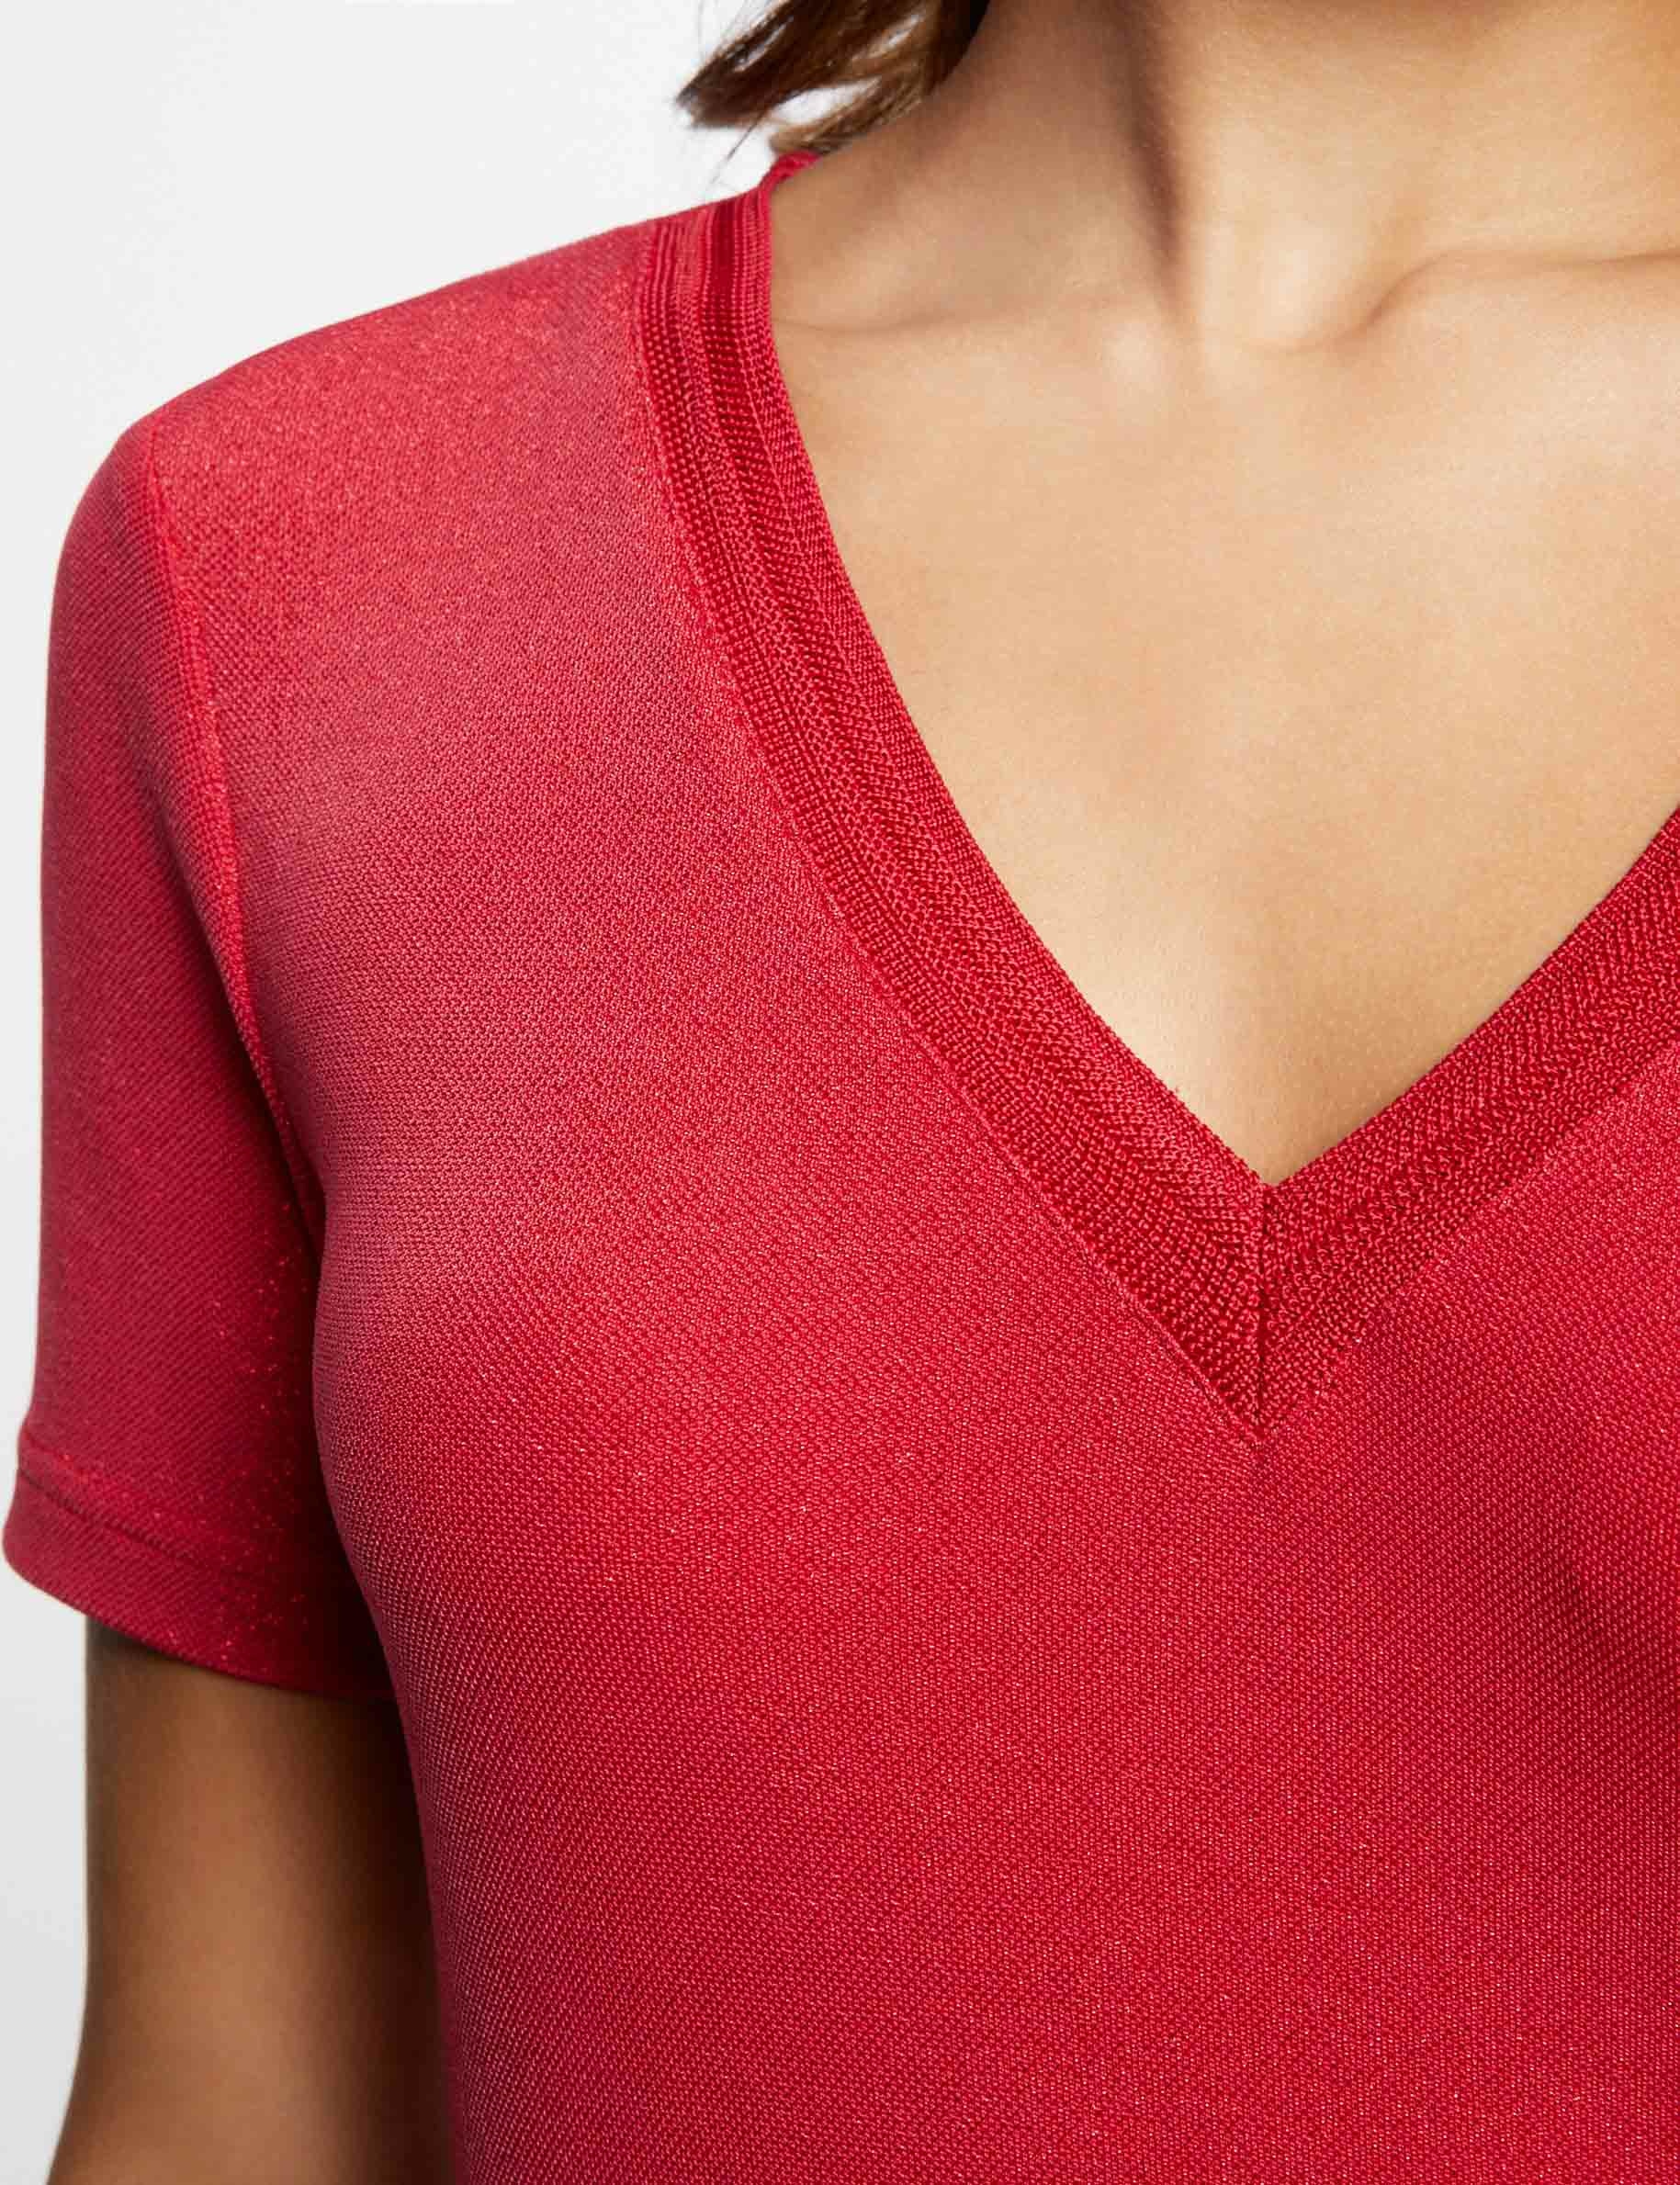 Short-sleeved t-shirt with V-neck medium red ladies'